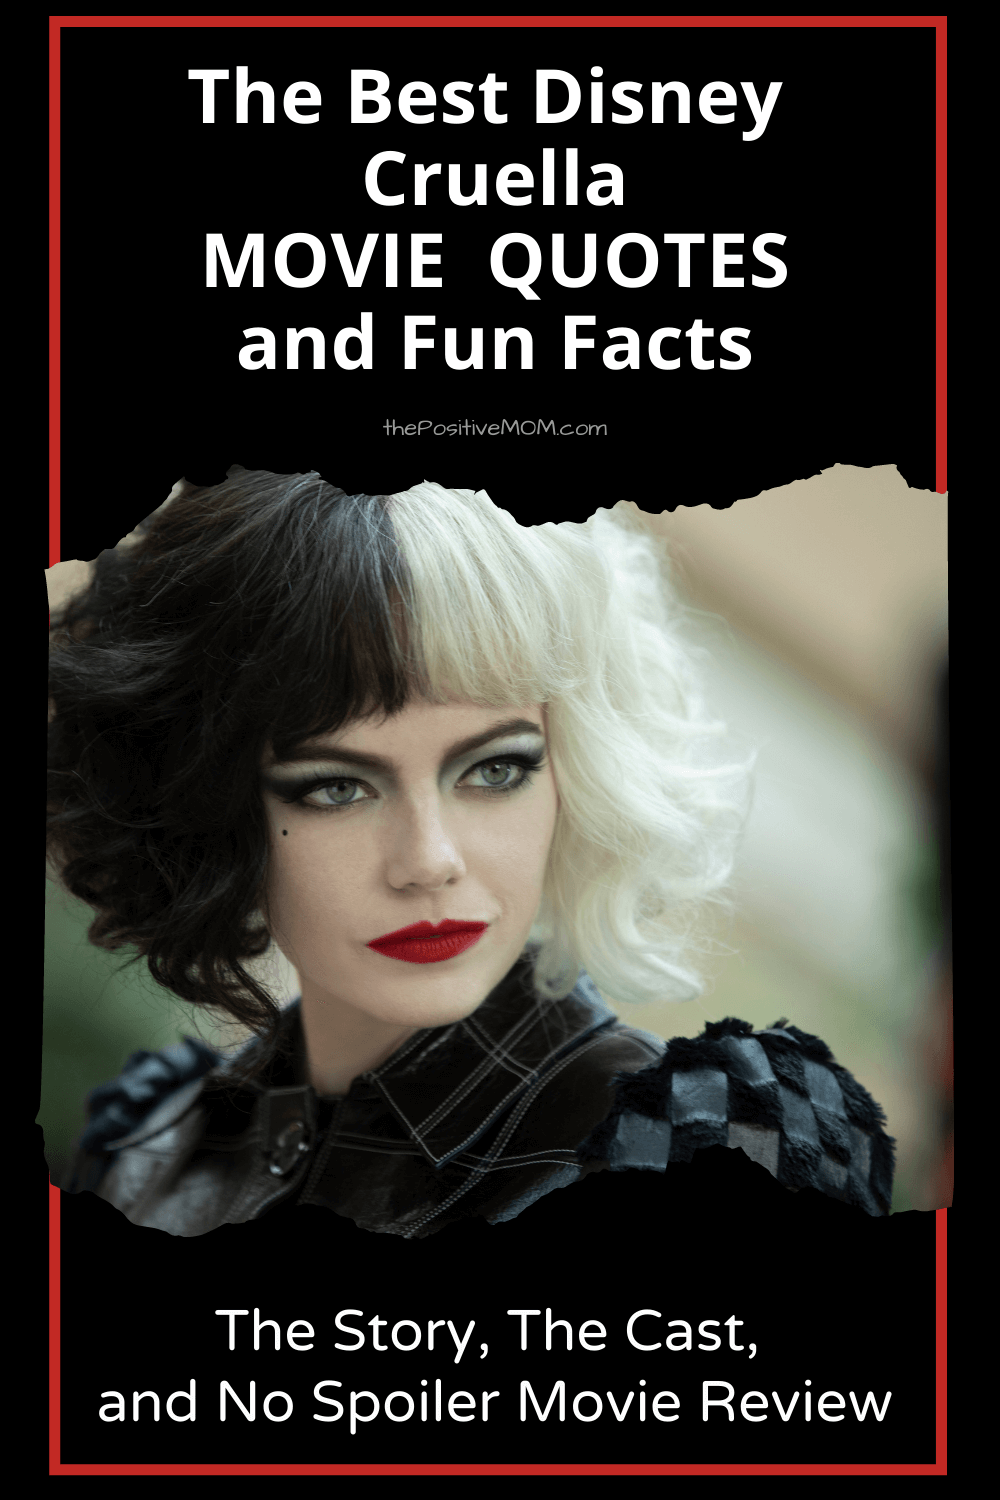 The Best Disney Cruella Movie Quotes and Fun Facts